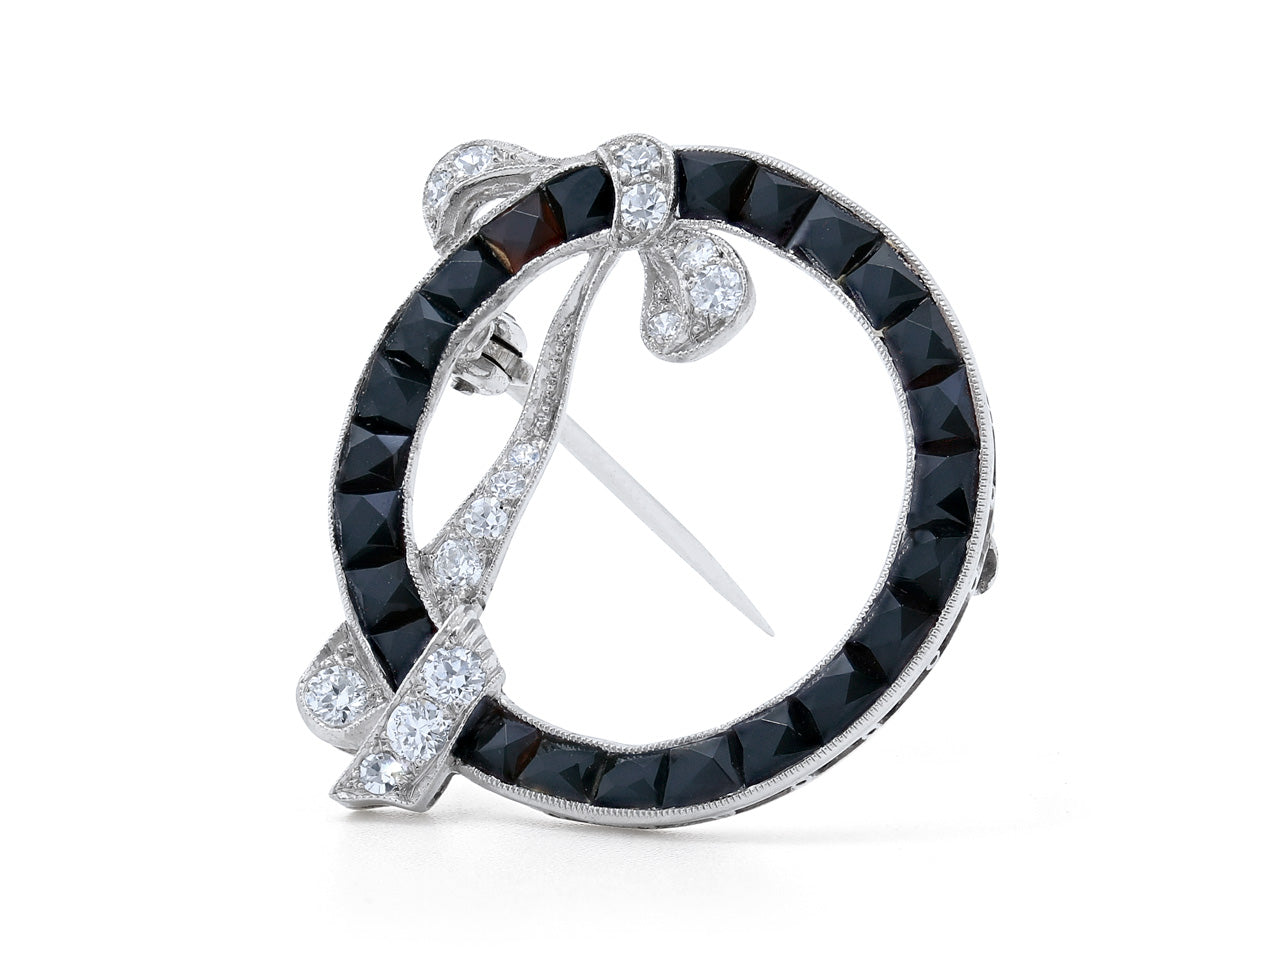 Art Deco Diamond and Onyx Circle Pin in Platinum